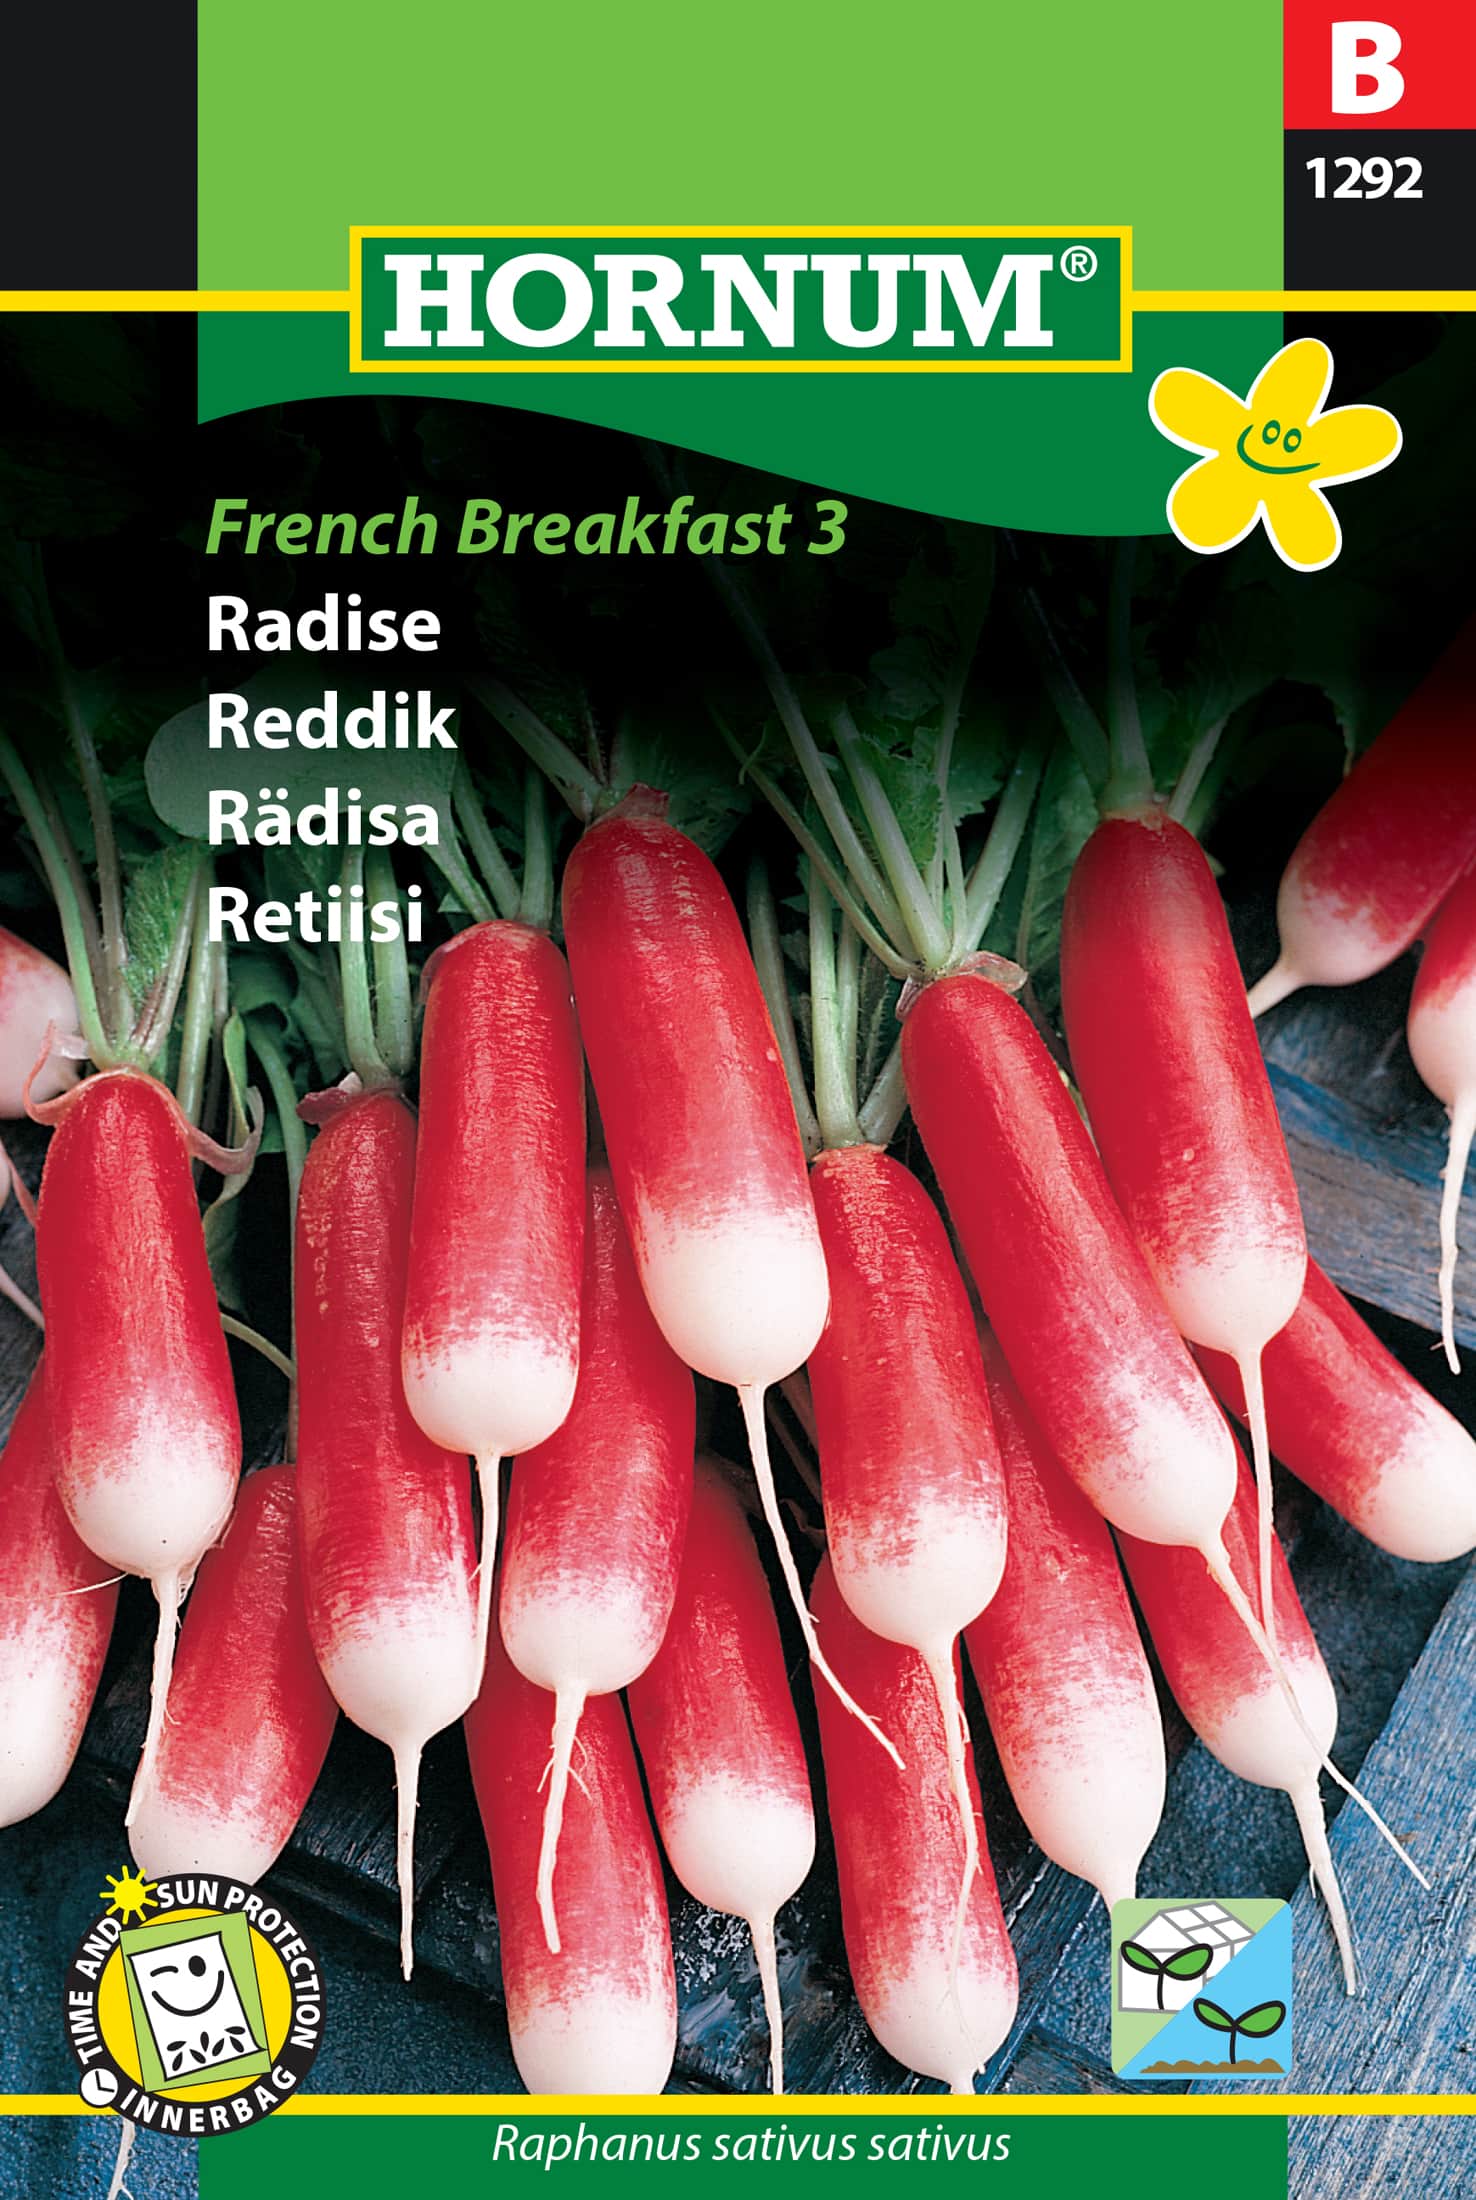 rdisa-french-breakfast-3-fr-1